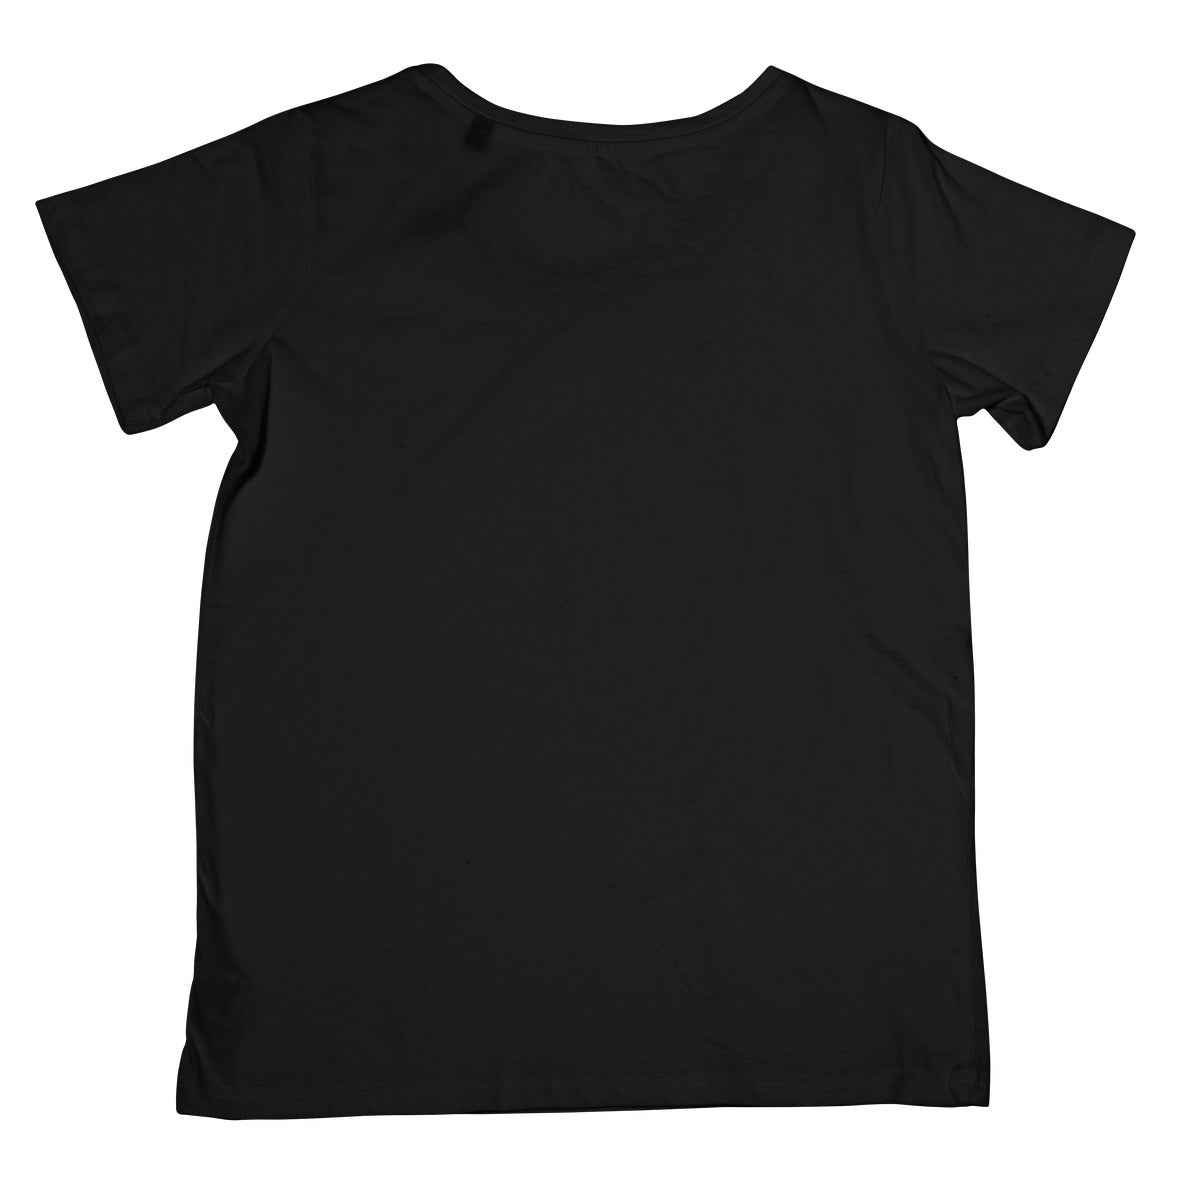 Impact Gold Logo Women's Retail T-Shirt